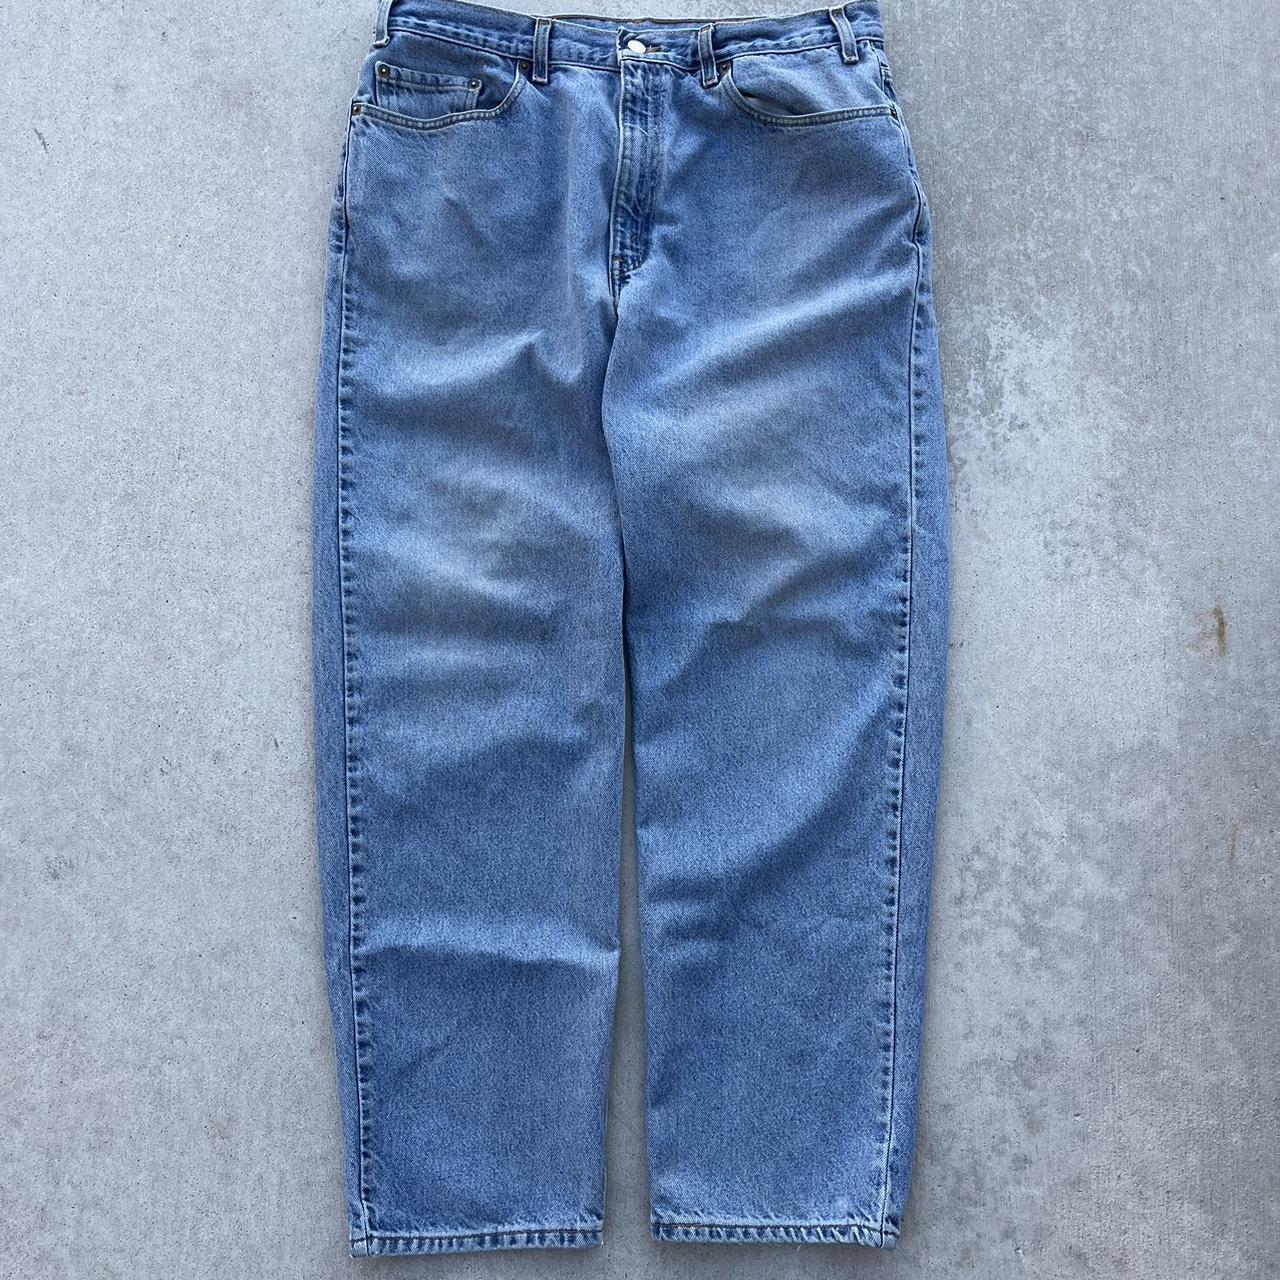 90s Levis Paper Tag Light Blue Wash Jeans 38... - Depop